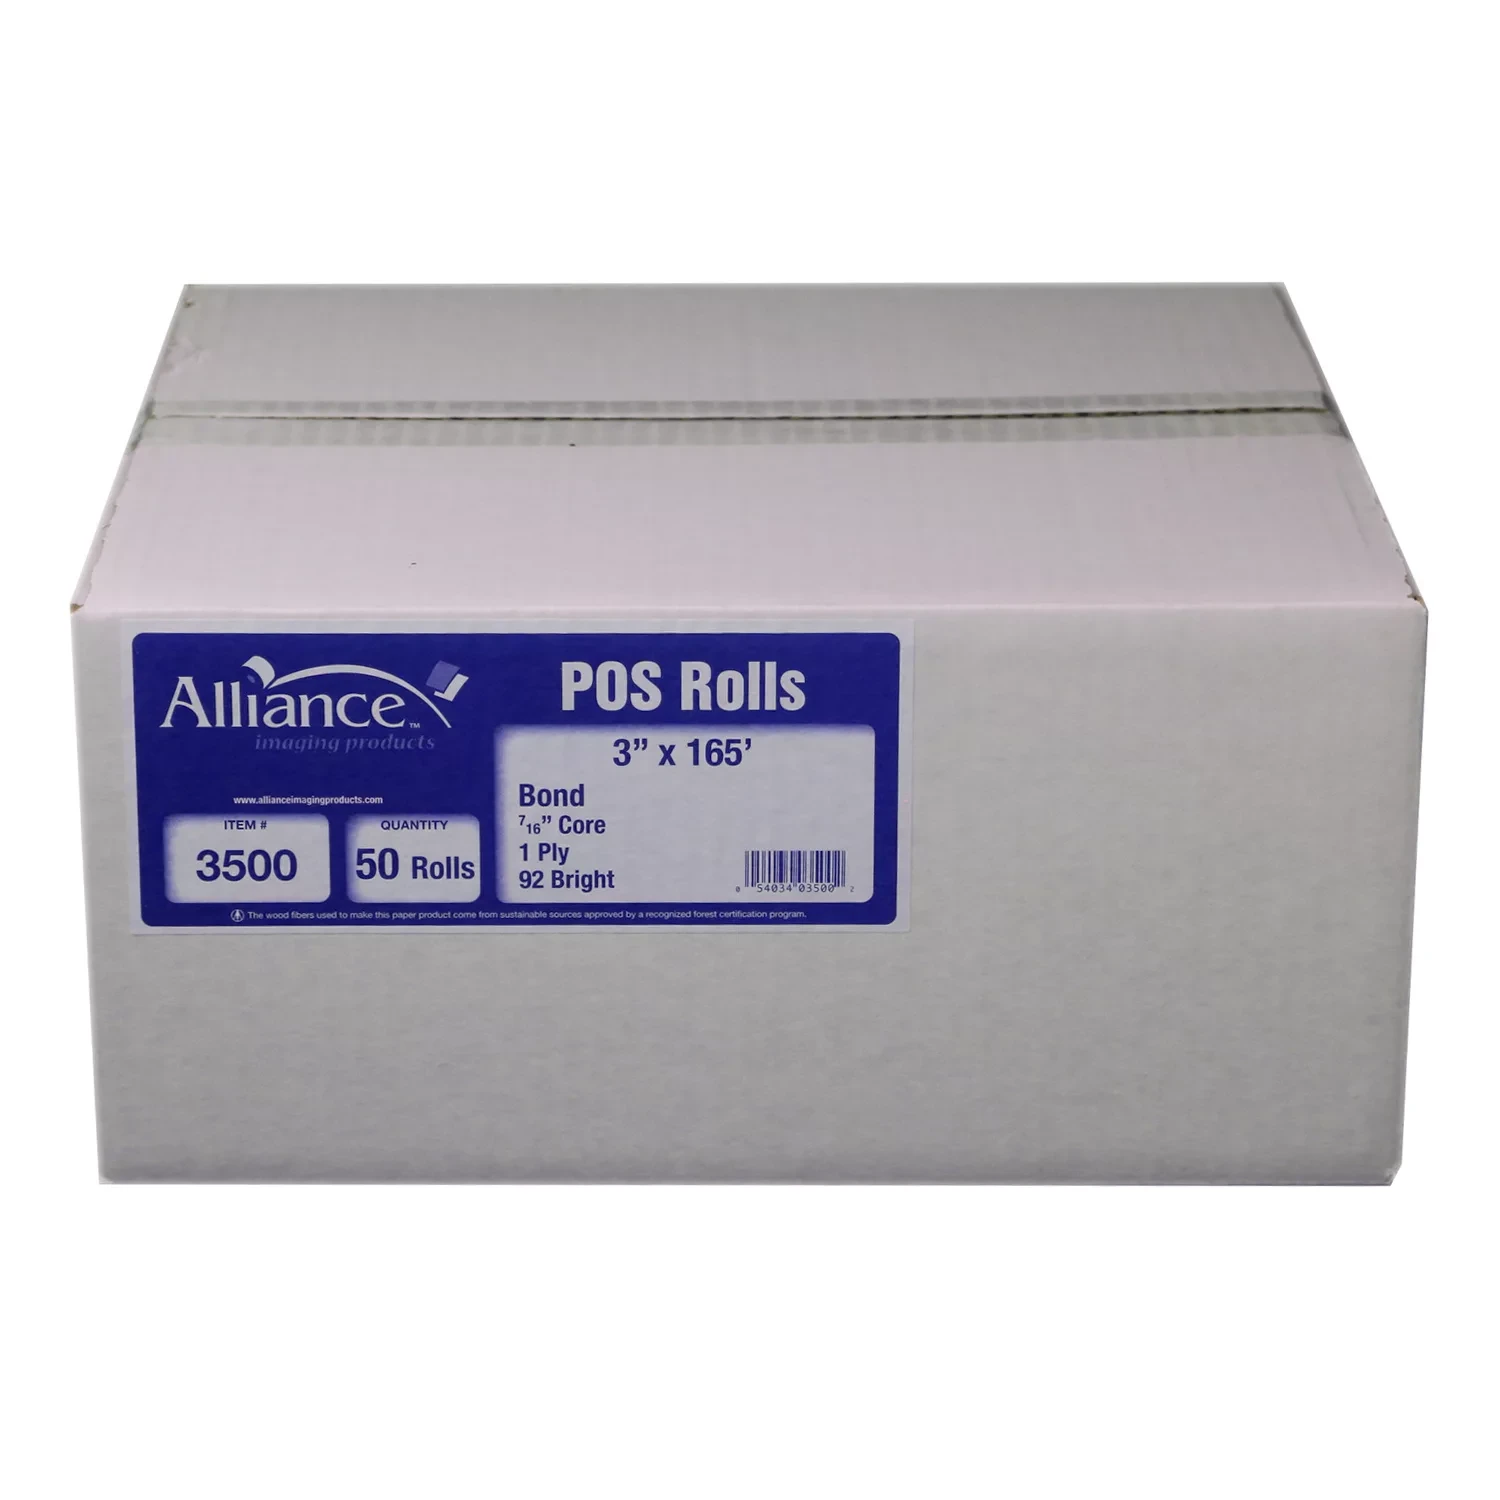 Alliance Bond Paper Receipt Rolls, 3"x165', 50 Rolls